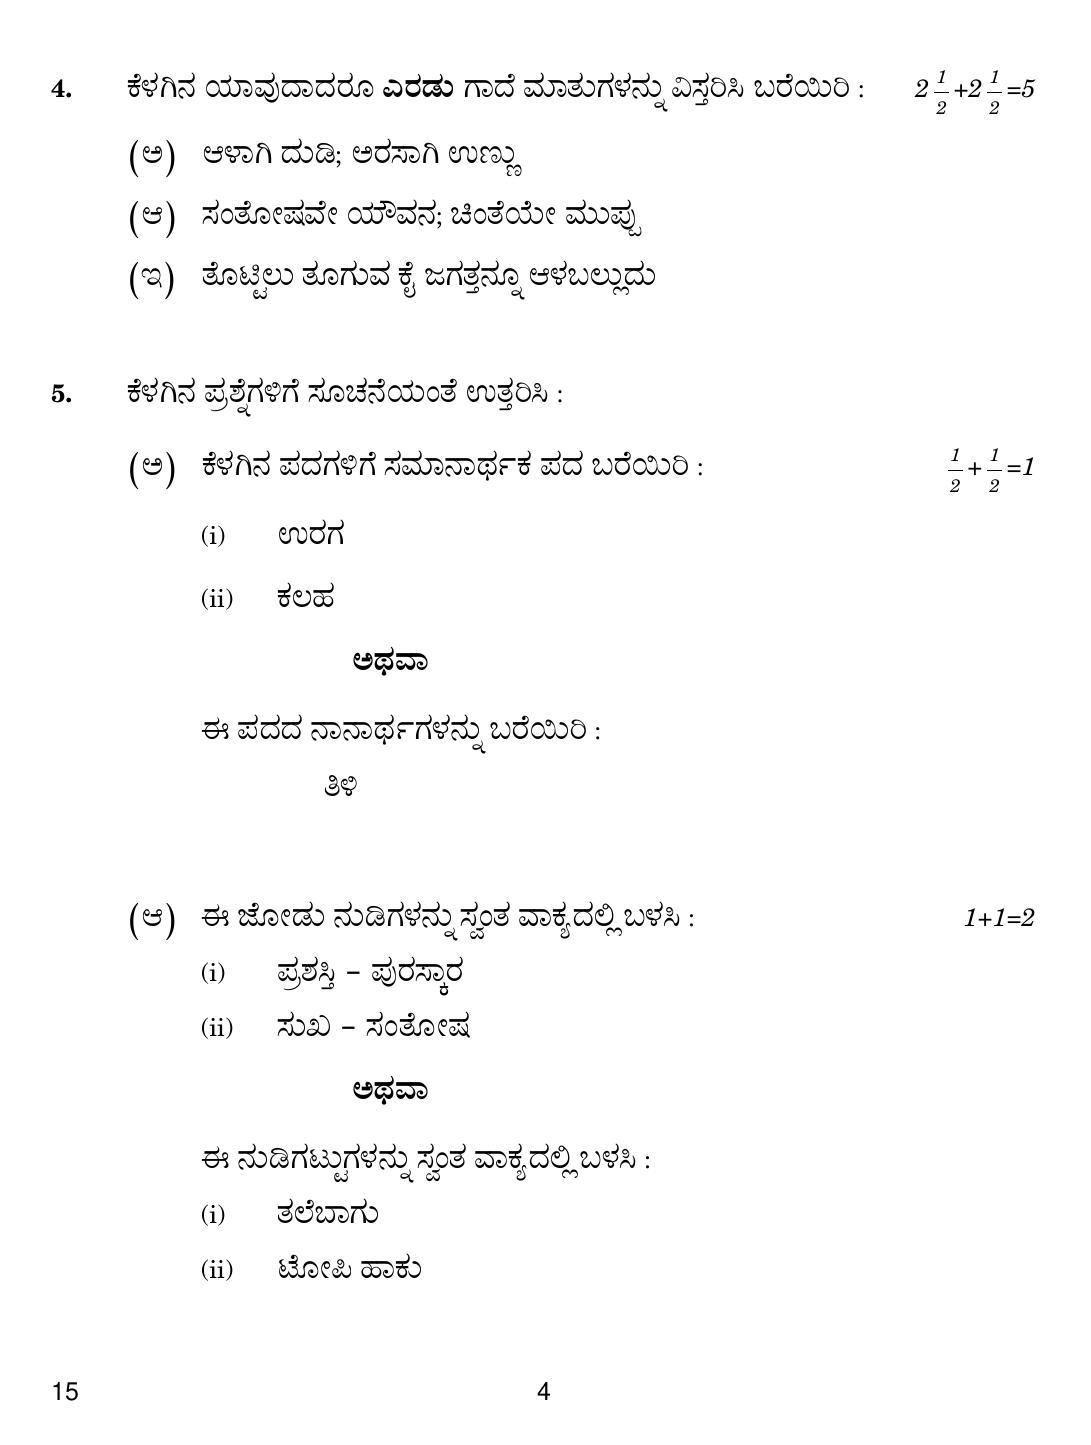 CBSE Class 12 15 Kannada 2018 Question Paper - Page 4